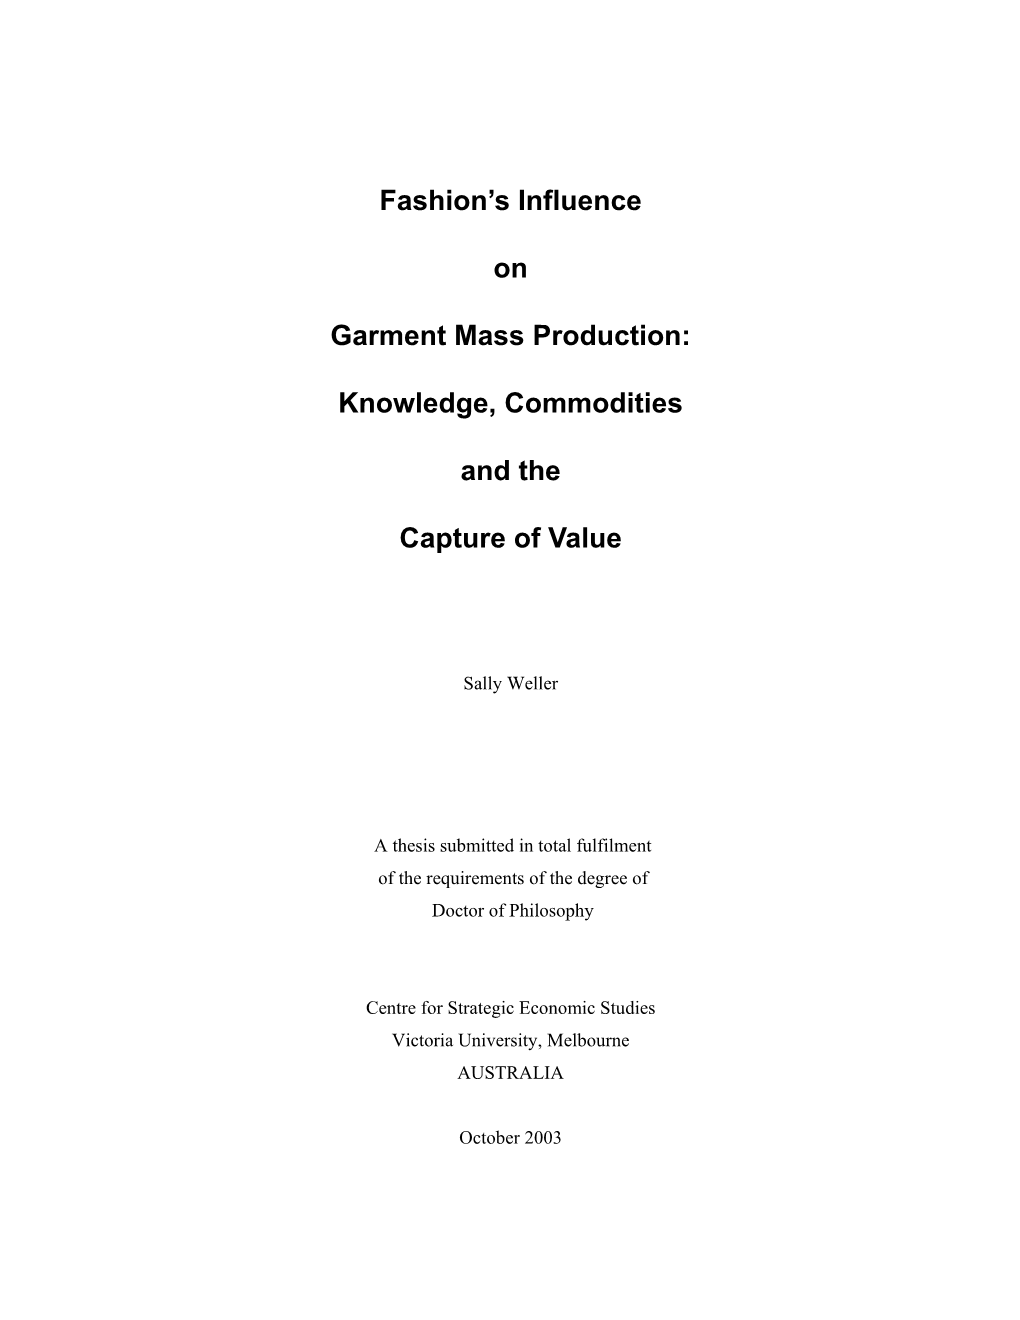 Fashion's Influence on Garment Mass Production